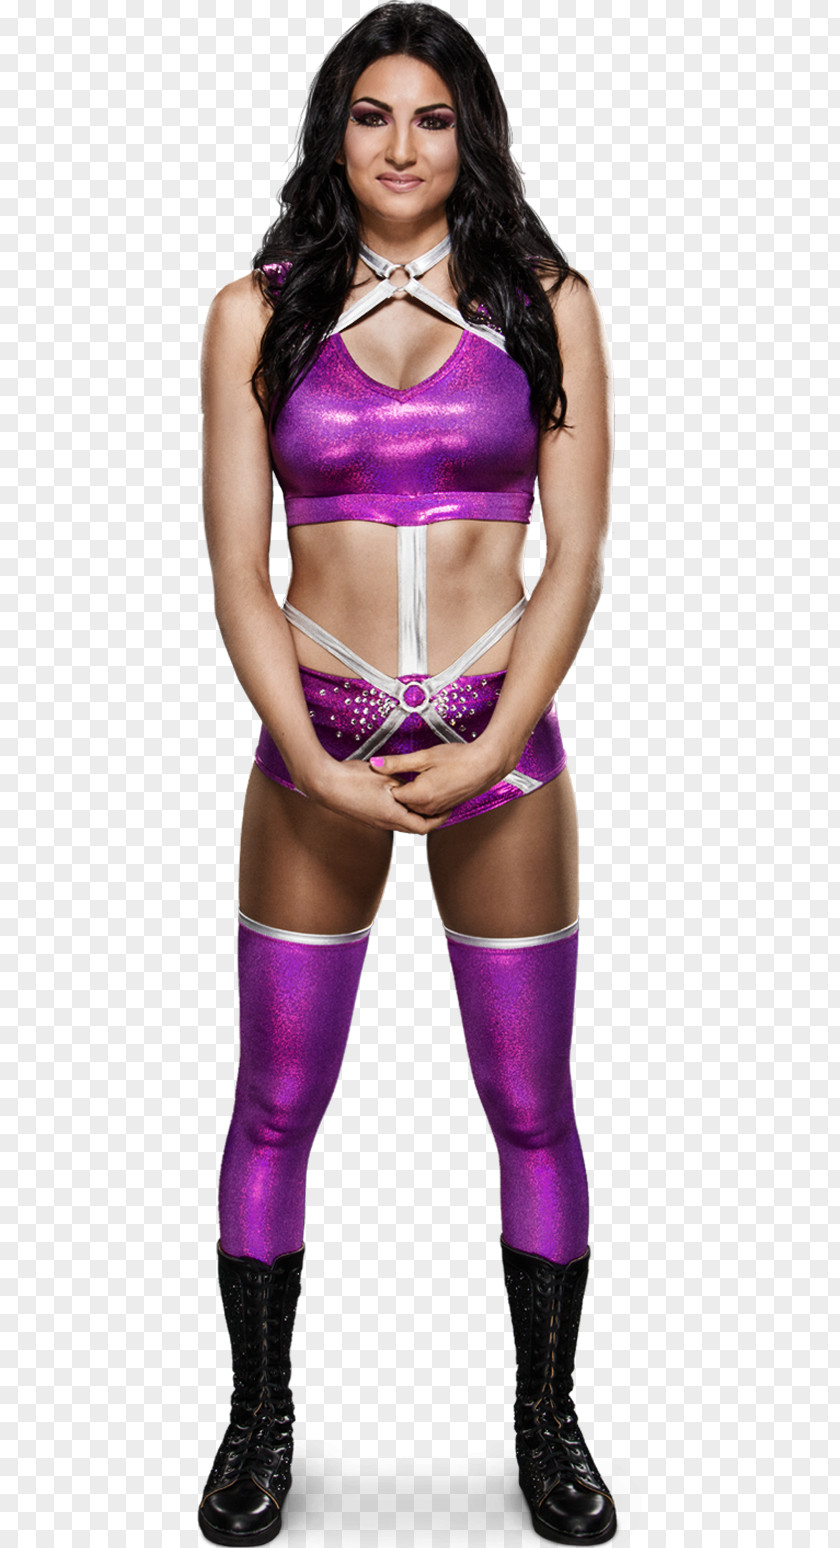 Billie Kay NXT Women's Championship WWE Women In Professional Wrestling PNG in wrestling, wrestler clipart PNG